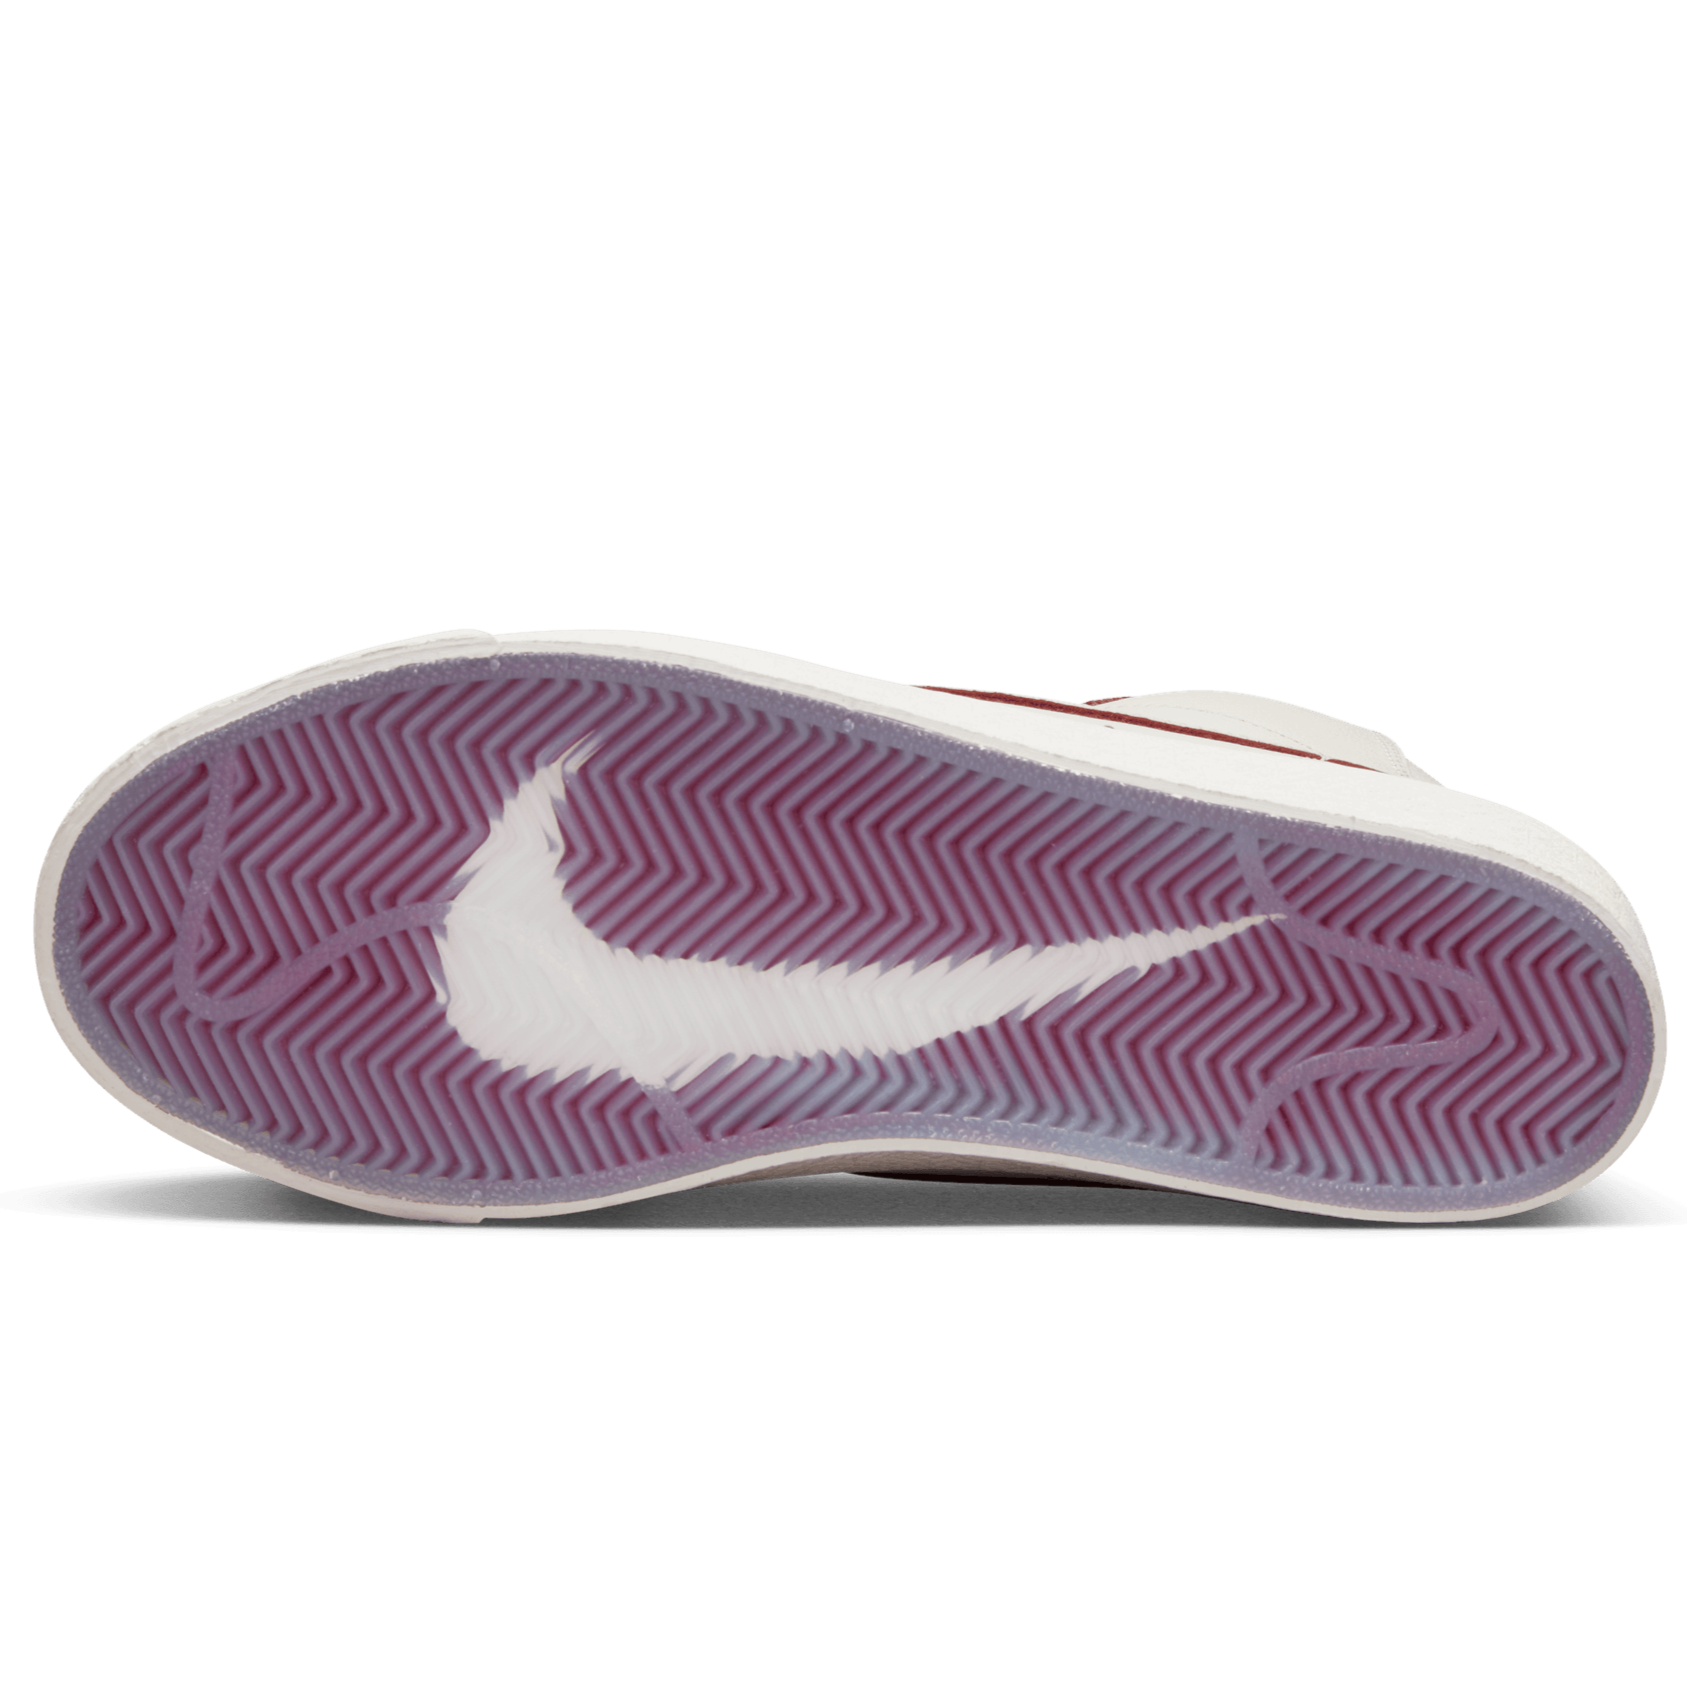 Welcome Madrid Nike SB Blazer Mid Skate Shoe Bottom